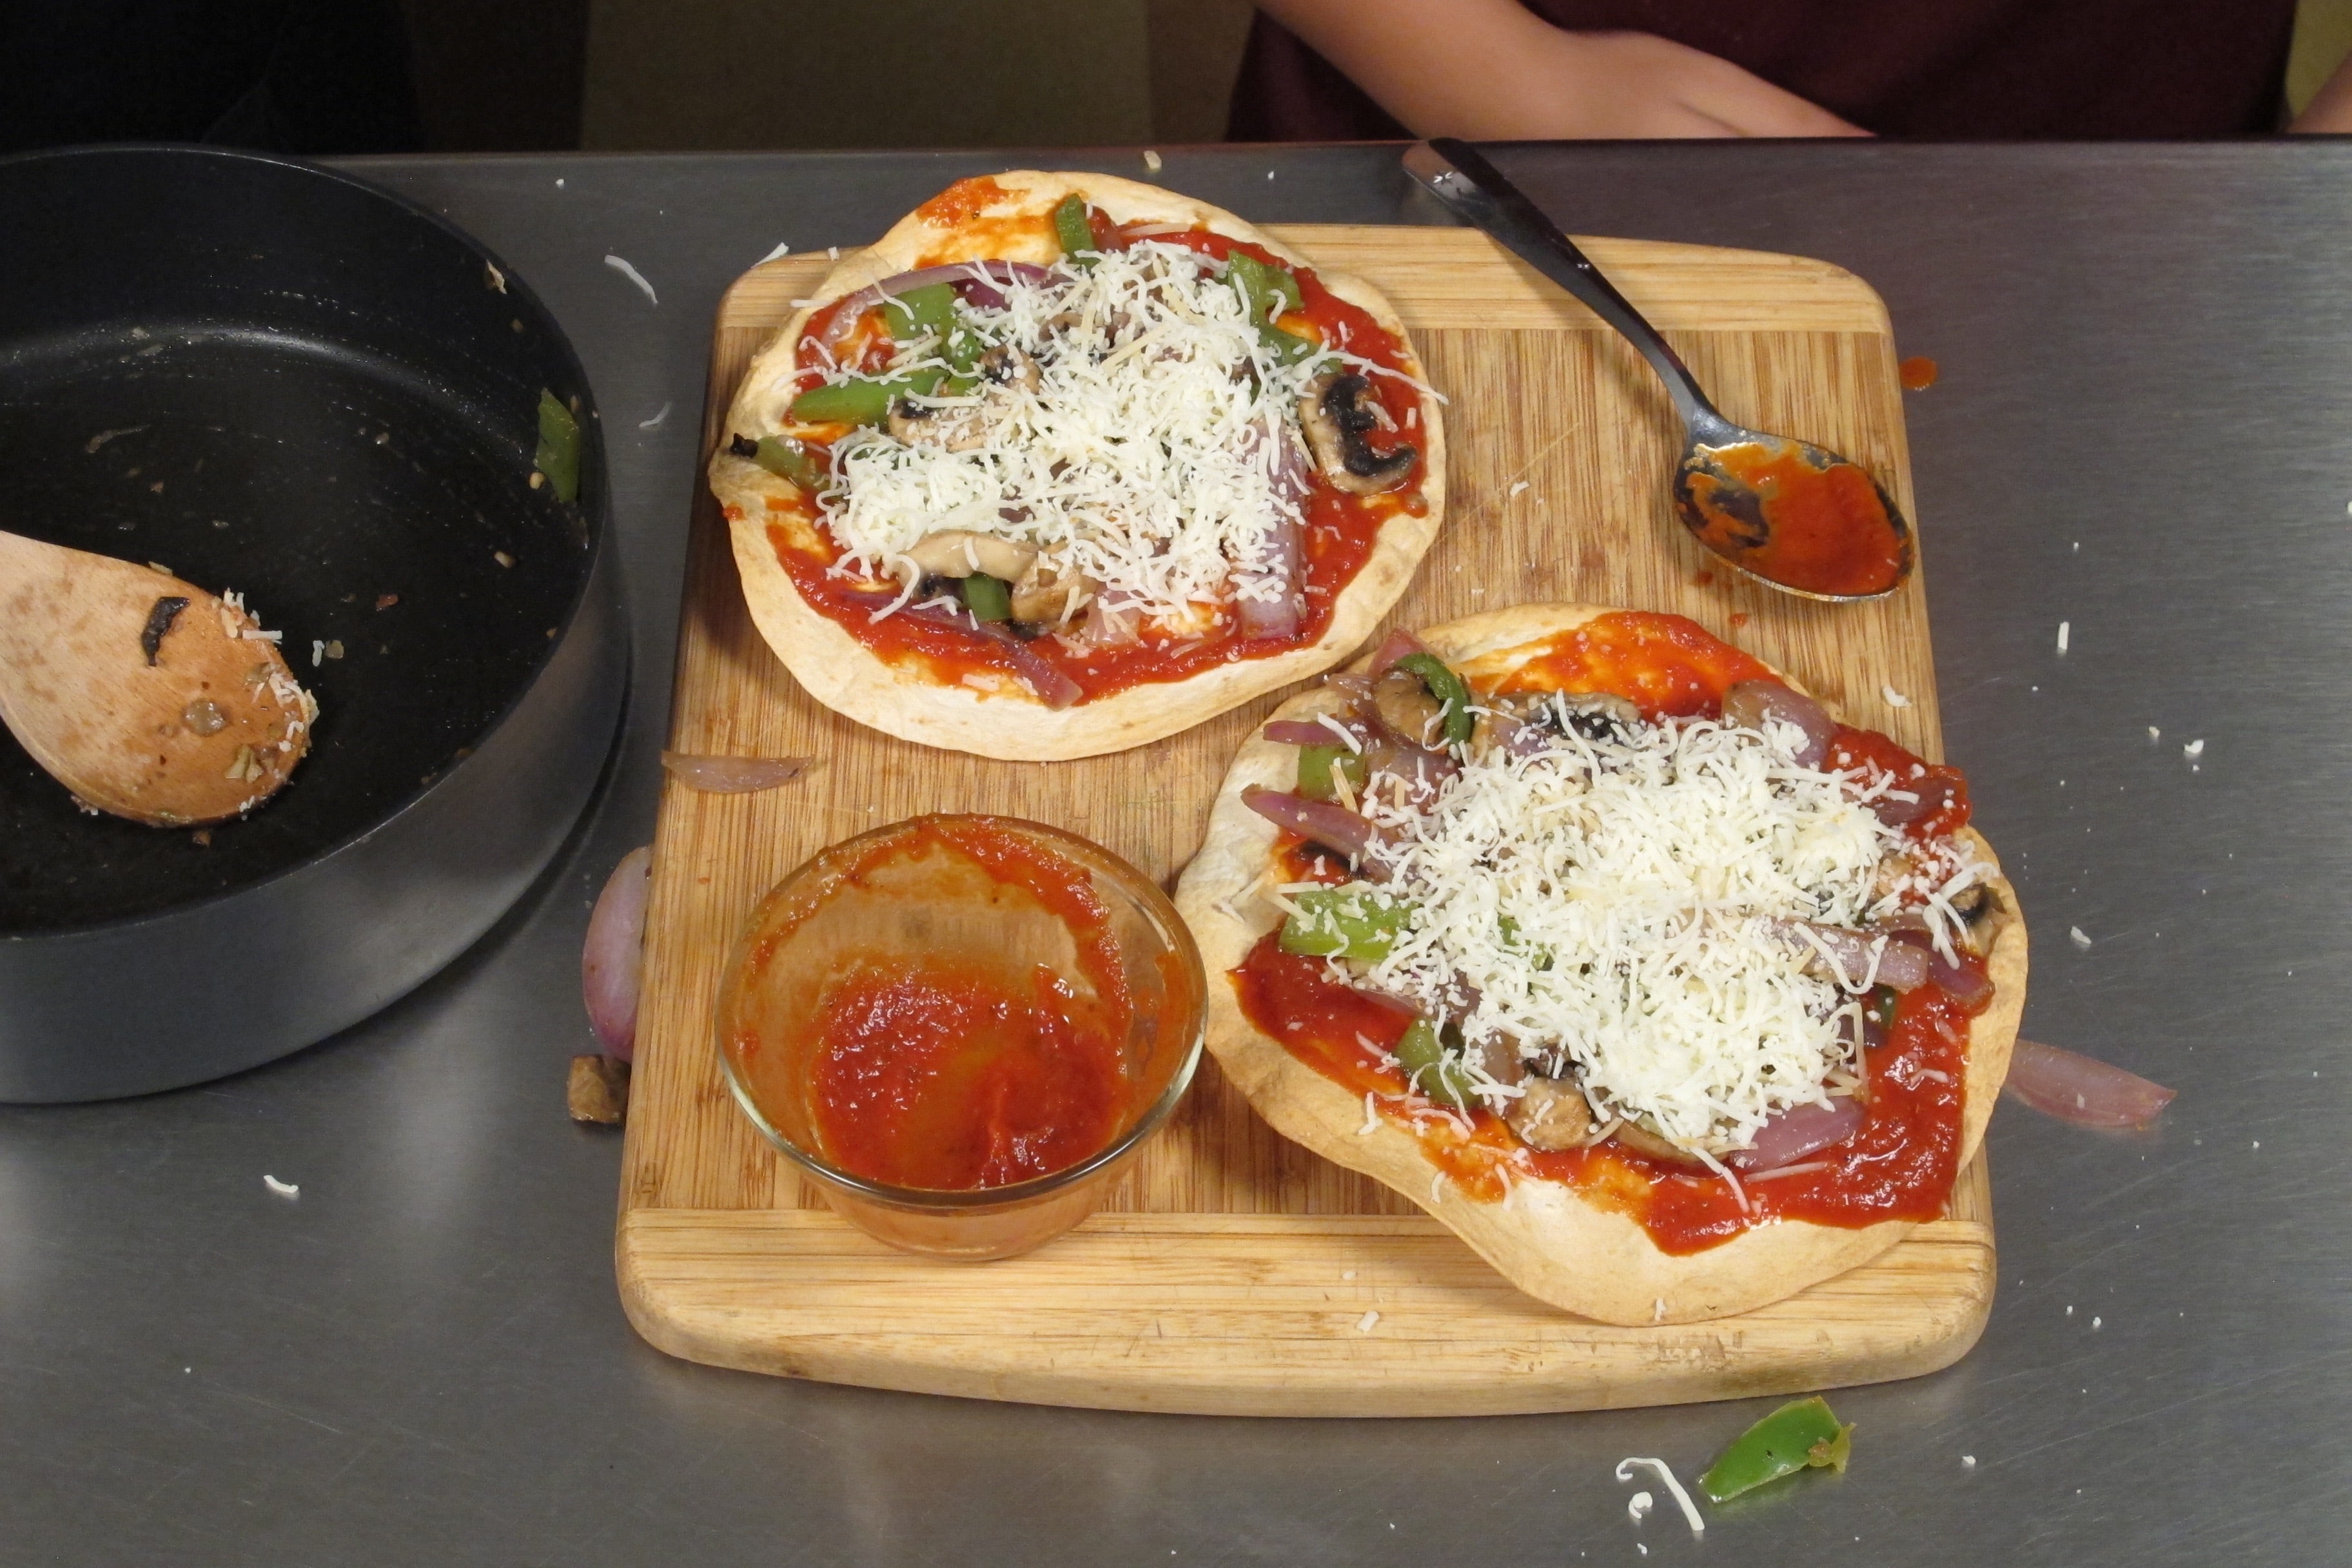 Spread 2 tablespoons mozzarella cheese and ½ teaspoon of Parmesan cheese onto each tortilla crust.